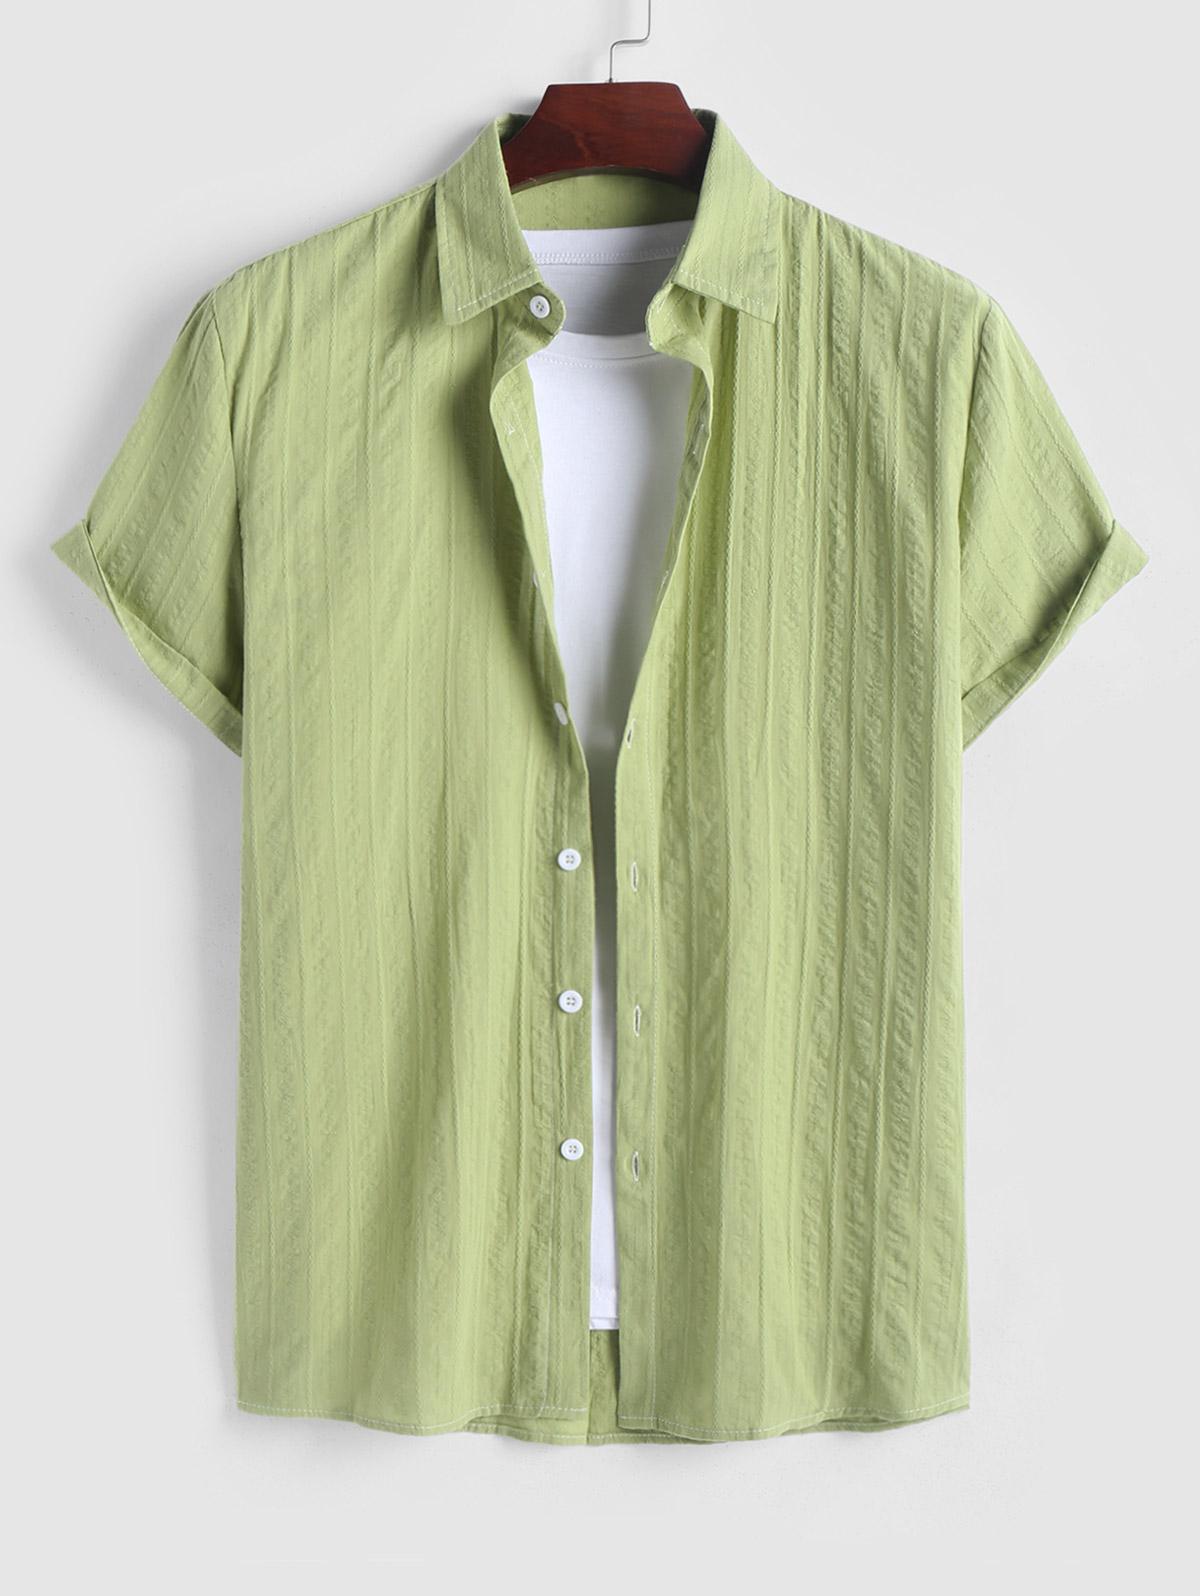 ZAFUL Men's Solid Color Jacquard Textured Short Sleeves Shirt L Green